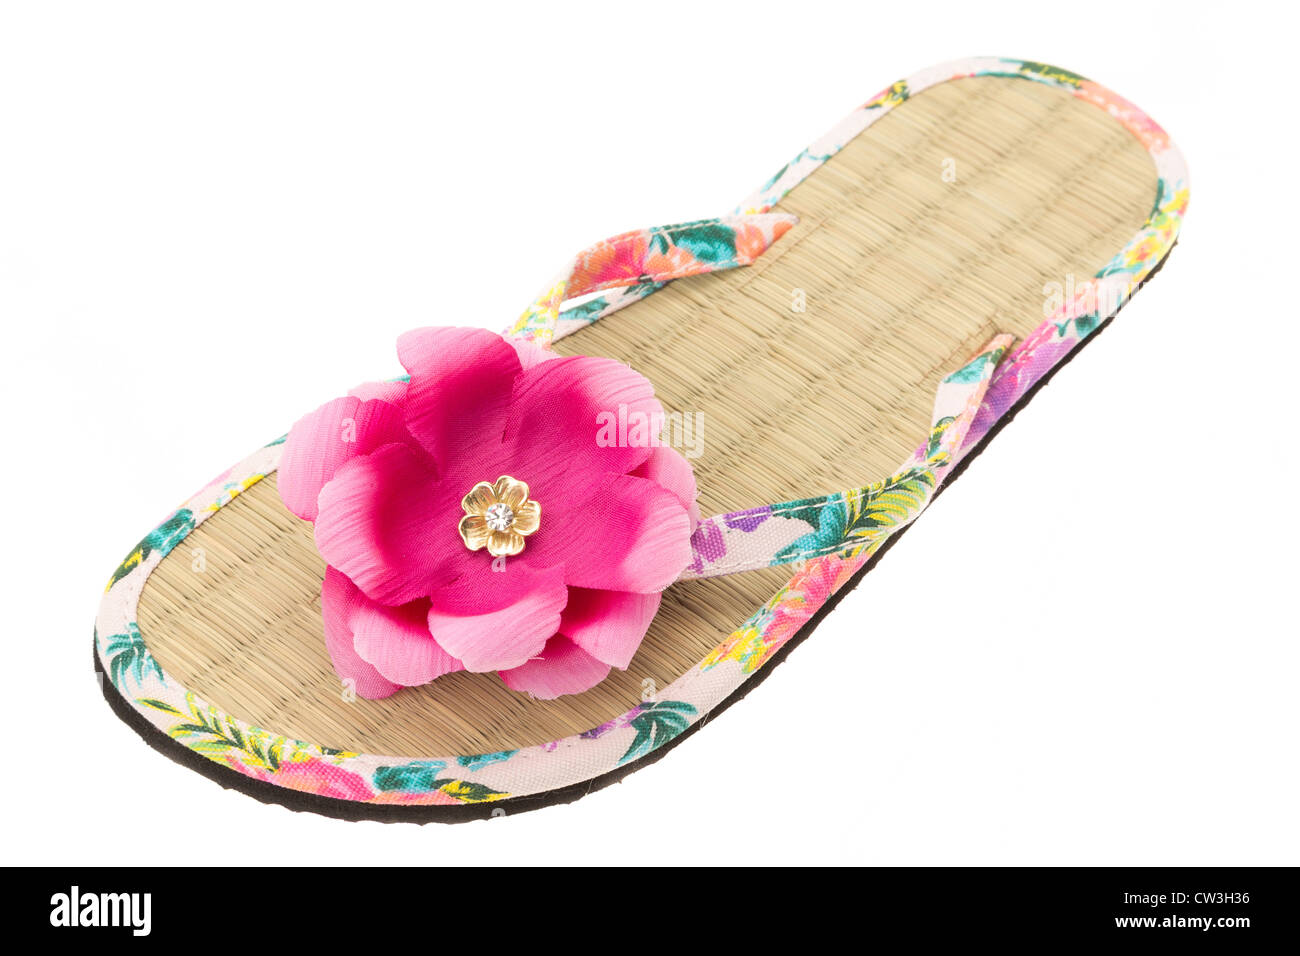 Ladies flip-flop summer wear sandals taken in the studio with a white background Stock Photo